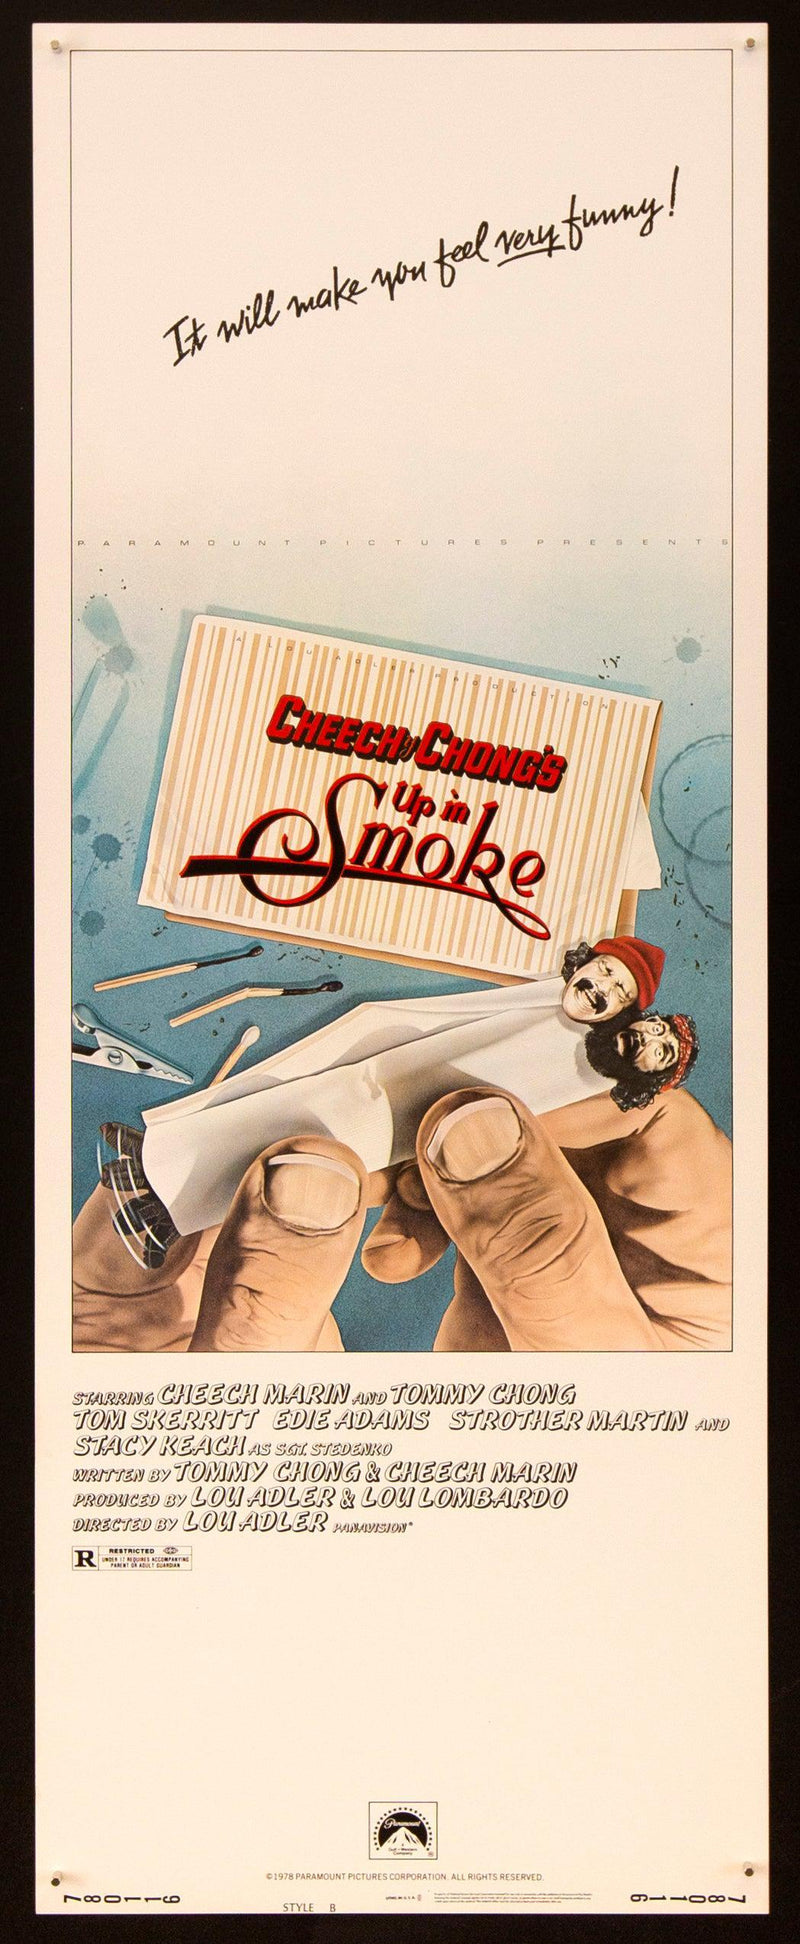 cheech and chong up in smoke poster